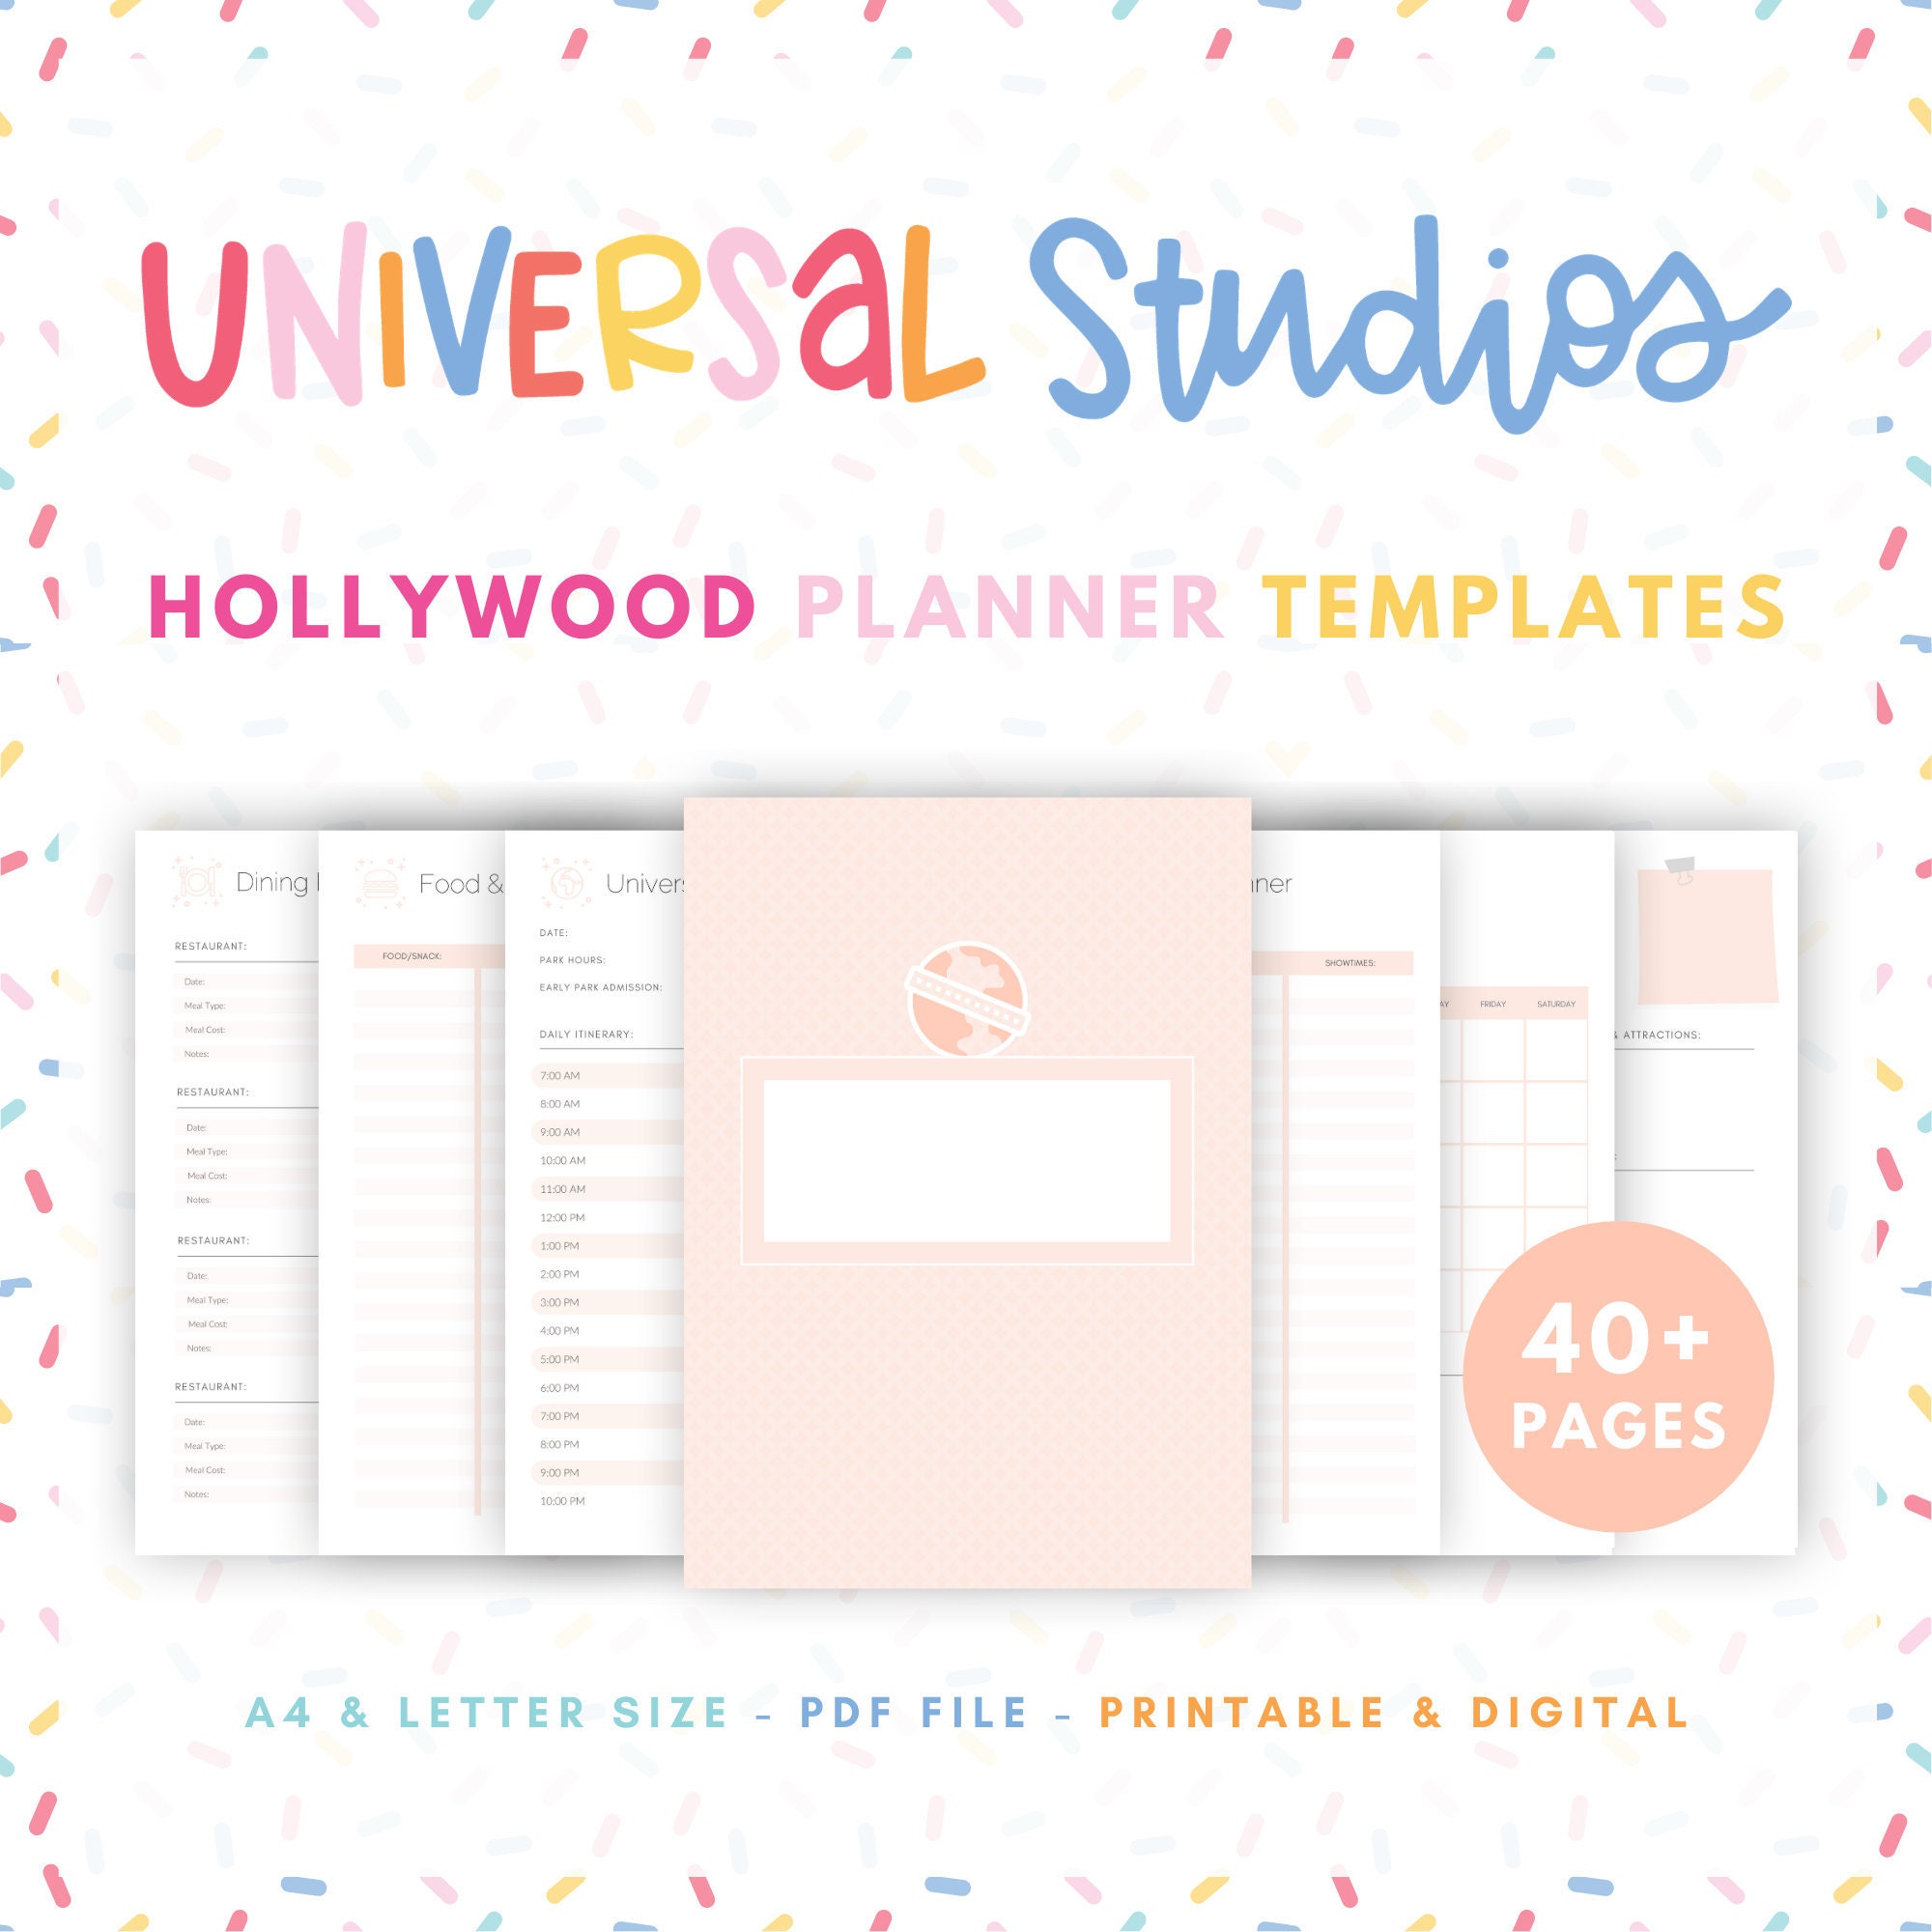 universal studios hollywood trip planner